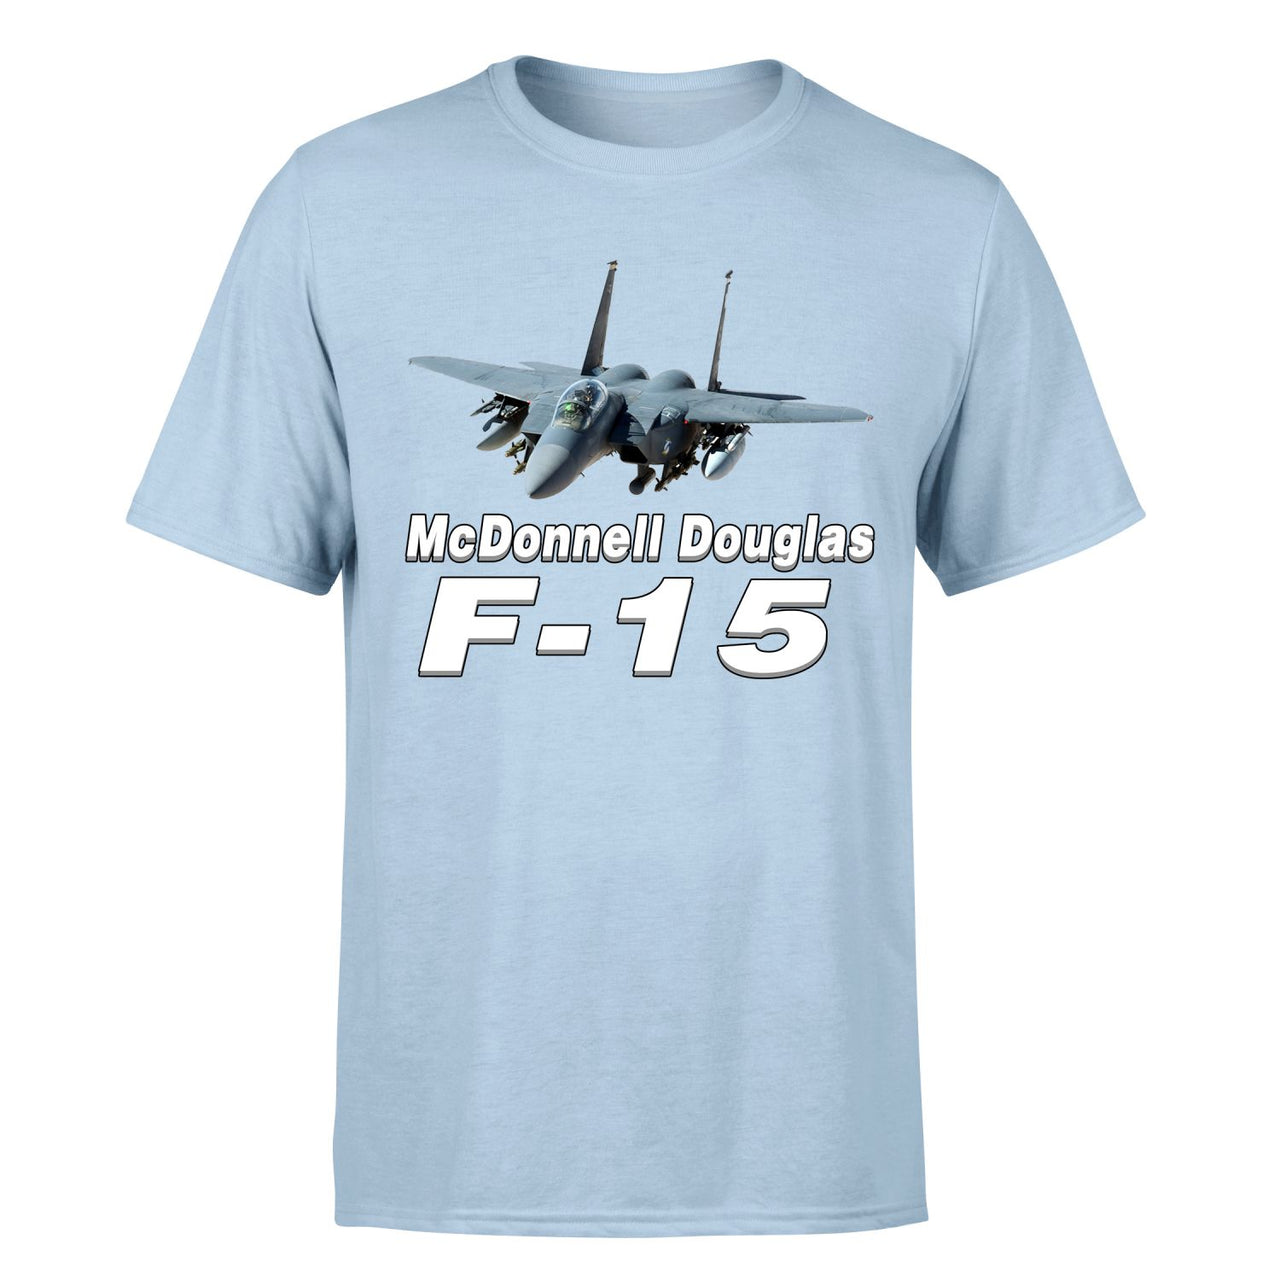 The McDonnell Douglas F15 Designed T-Shirts